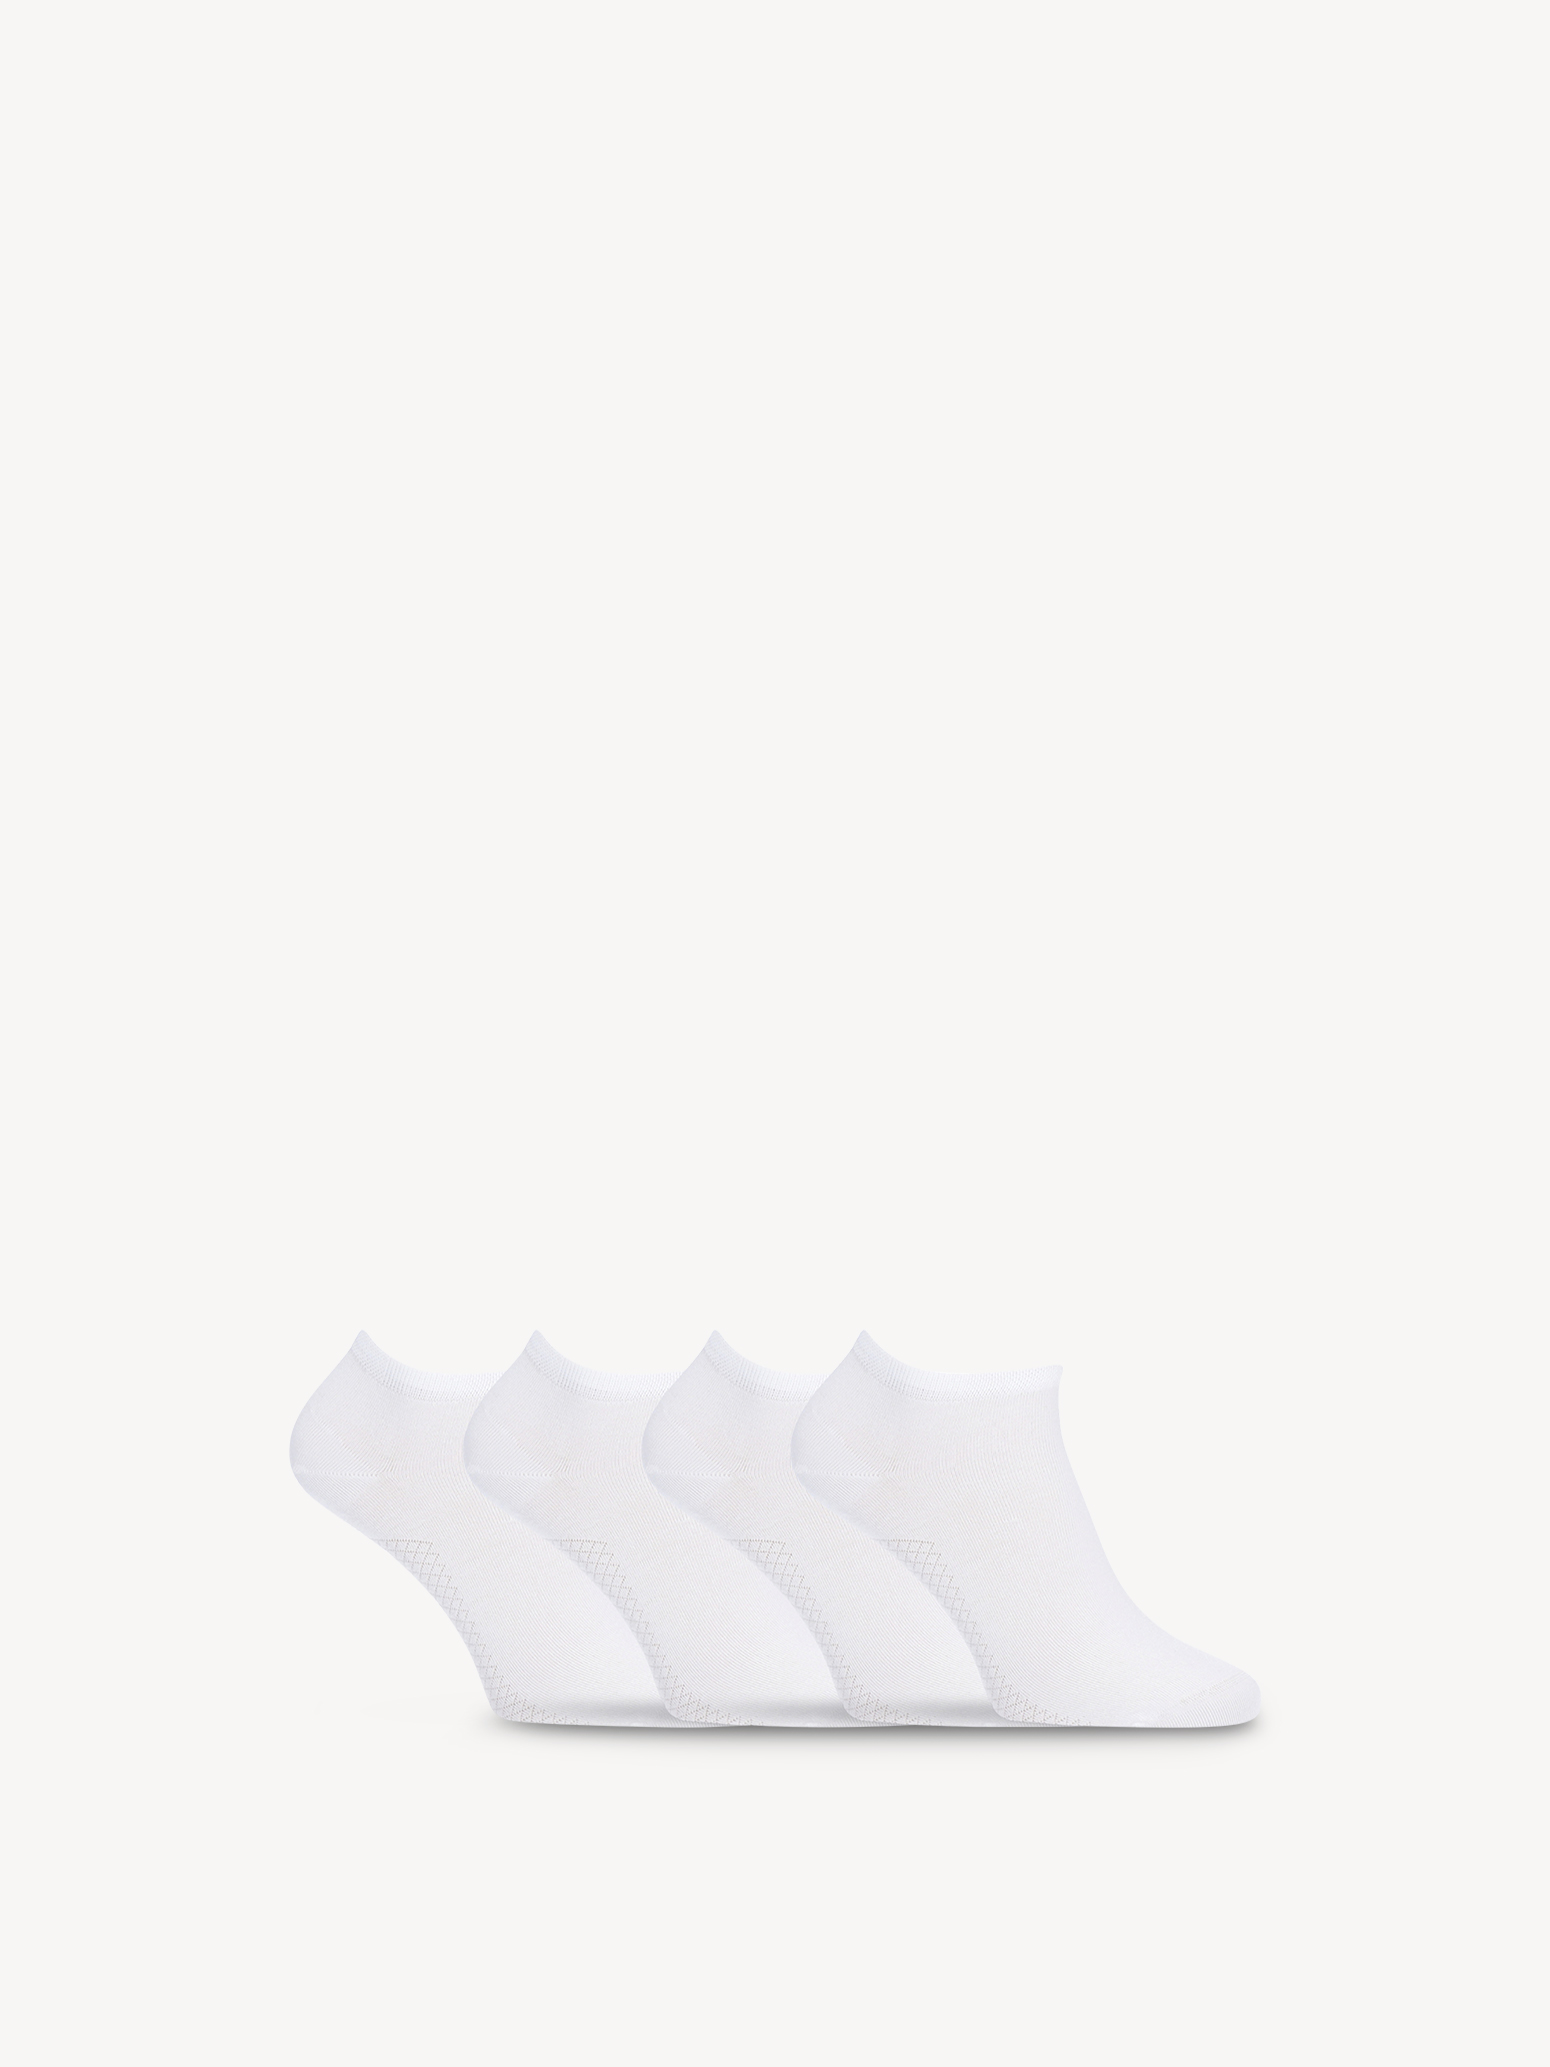 Socks set - white